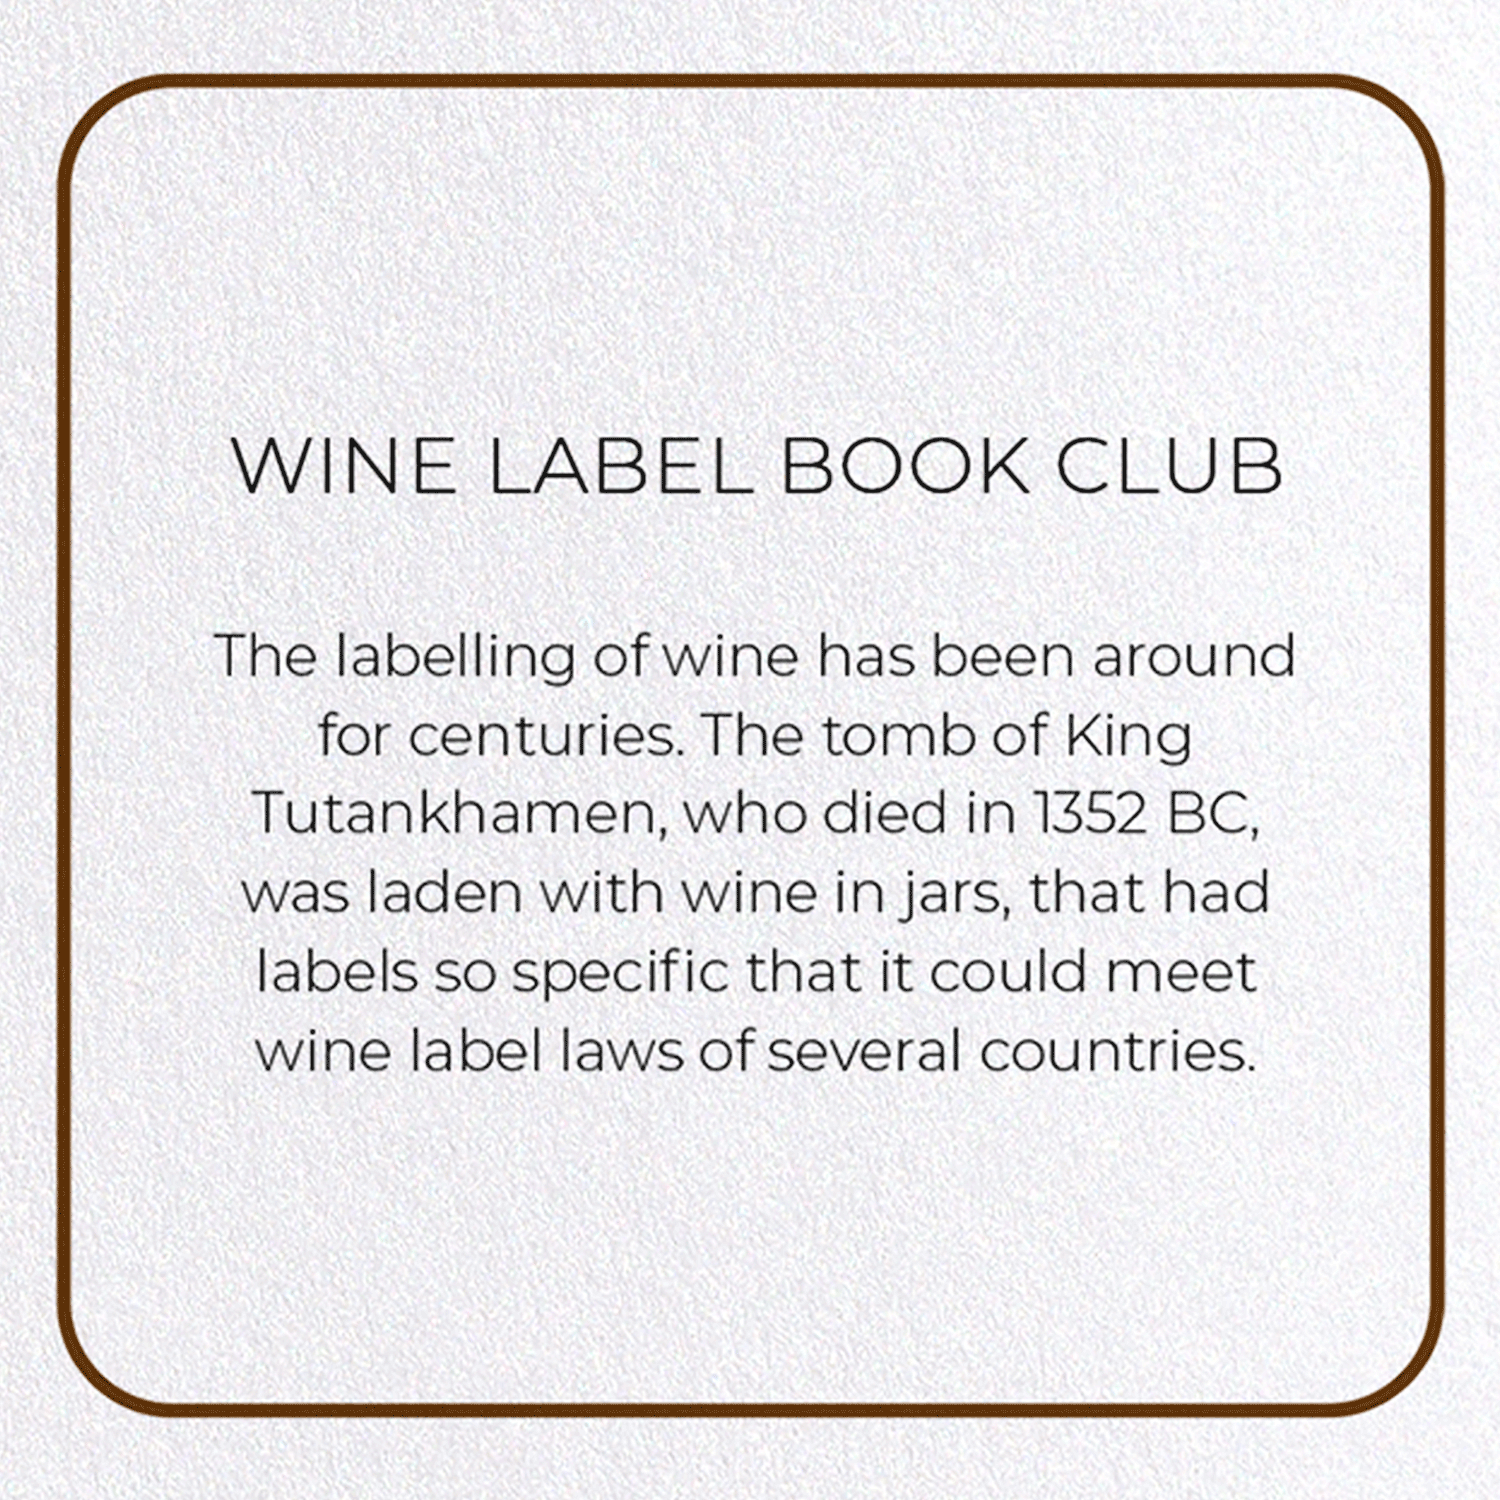 WINE LABEL BOOK CLUB